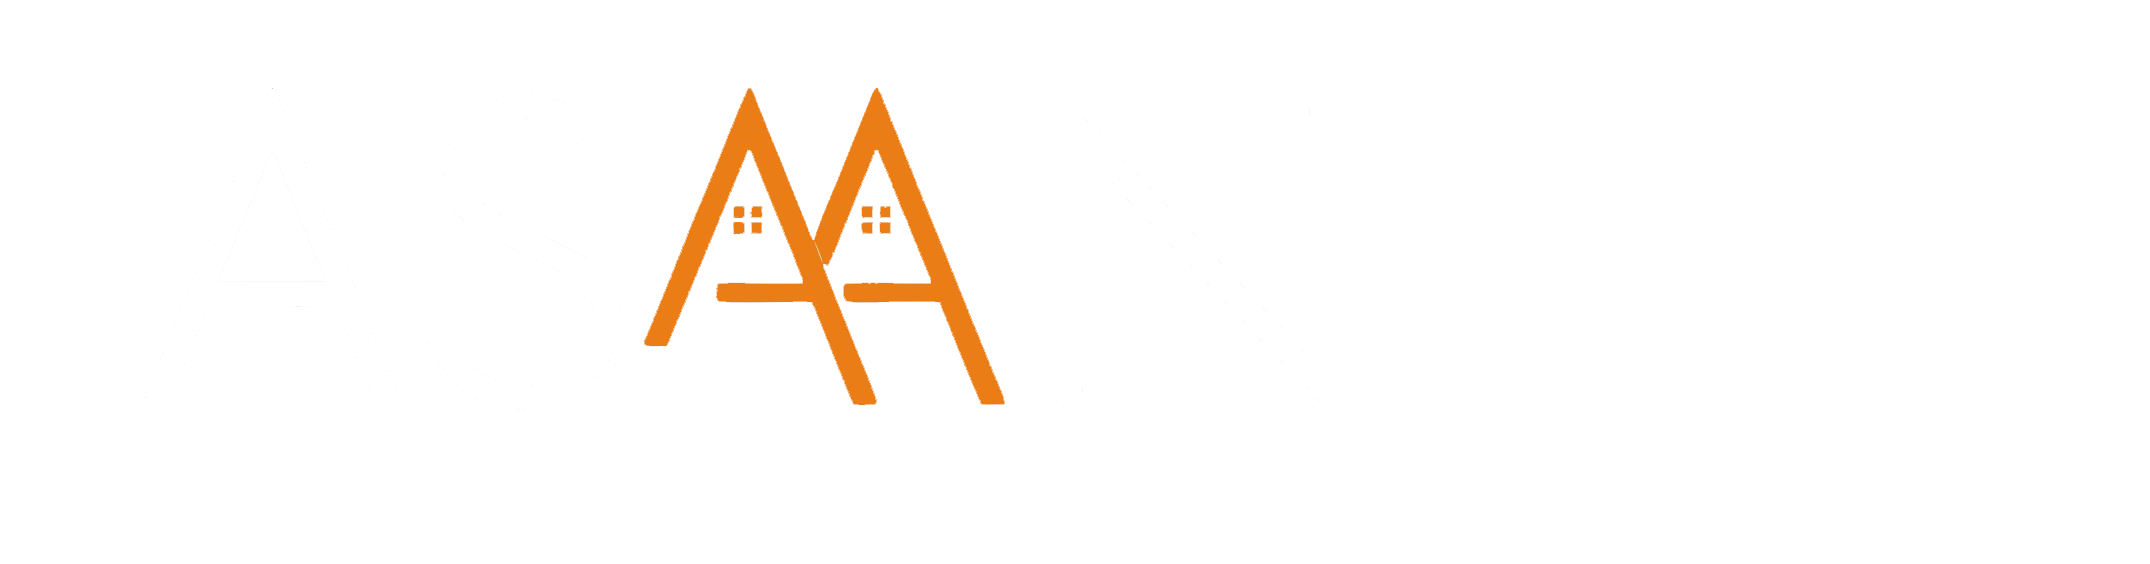 Asaan Logo-bw